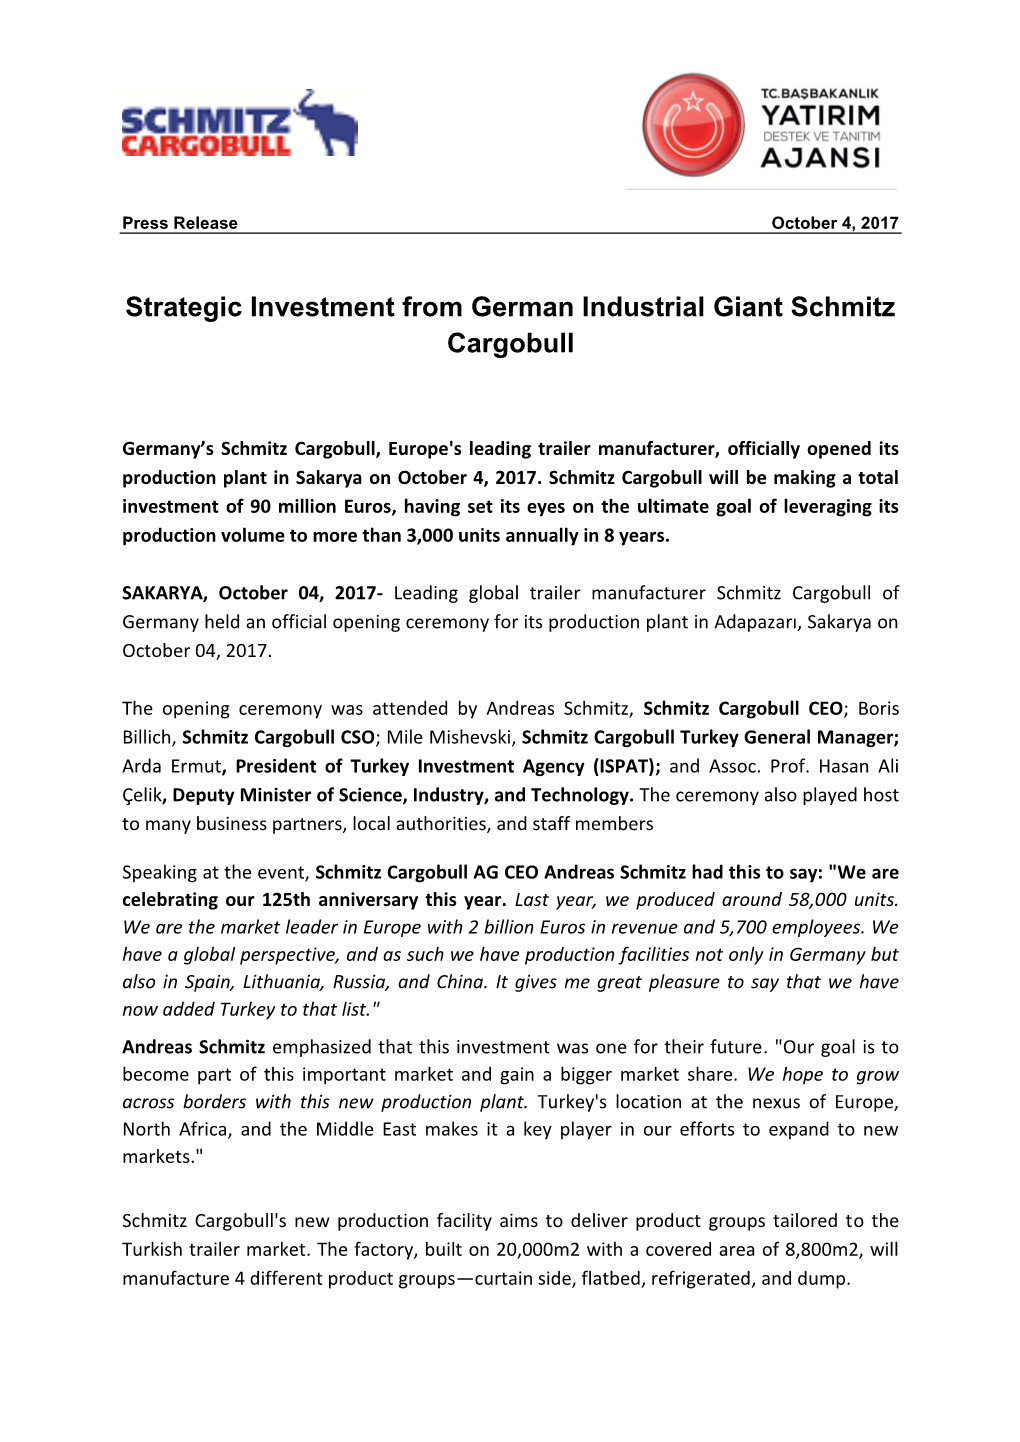 Strategic Investment from German Industrial Giant Schmitz Cargobull